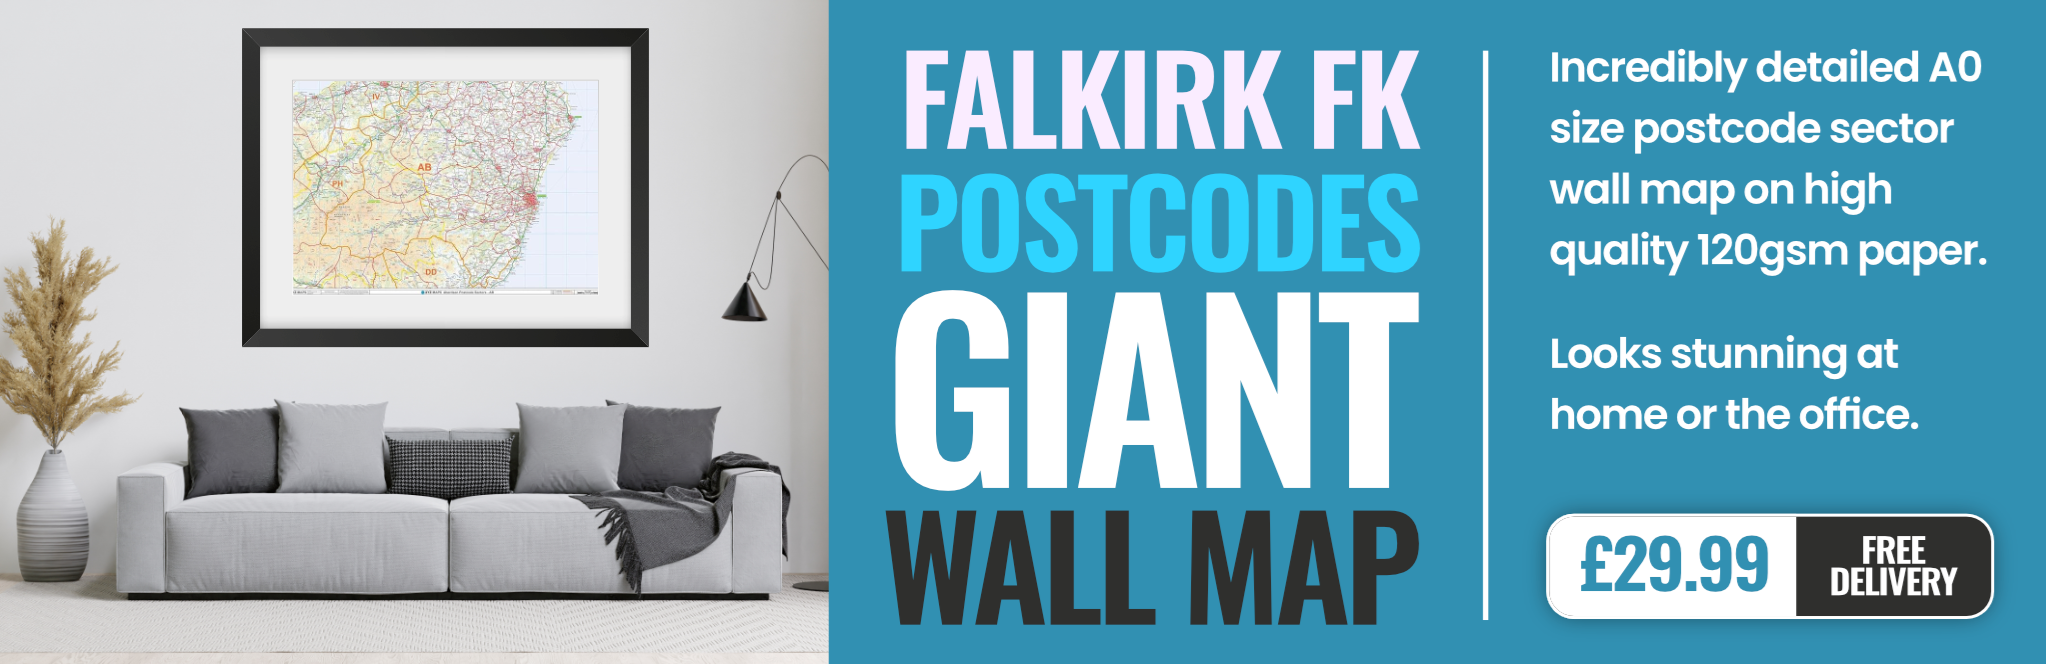 FK Postcode Wall Map